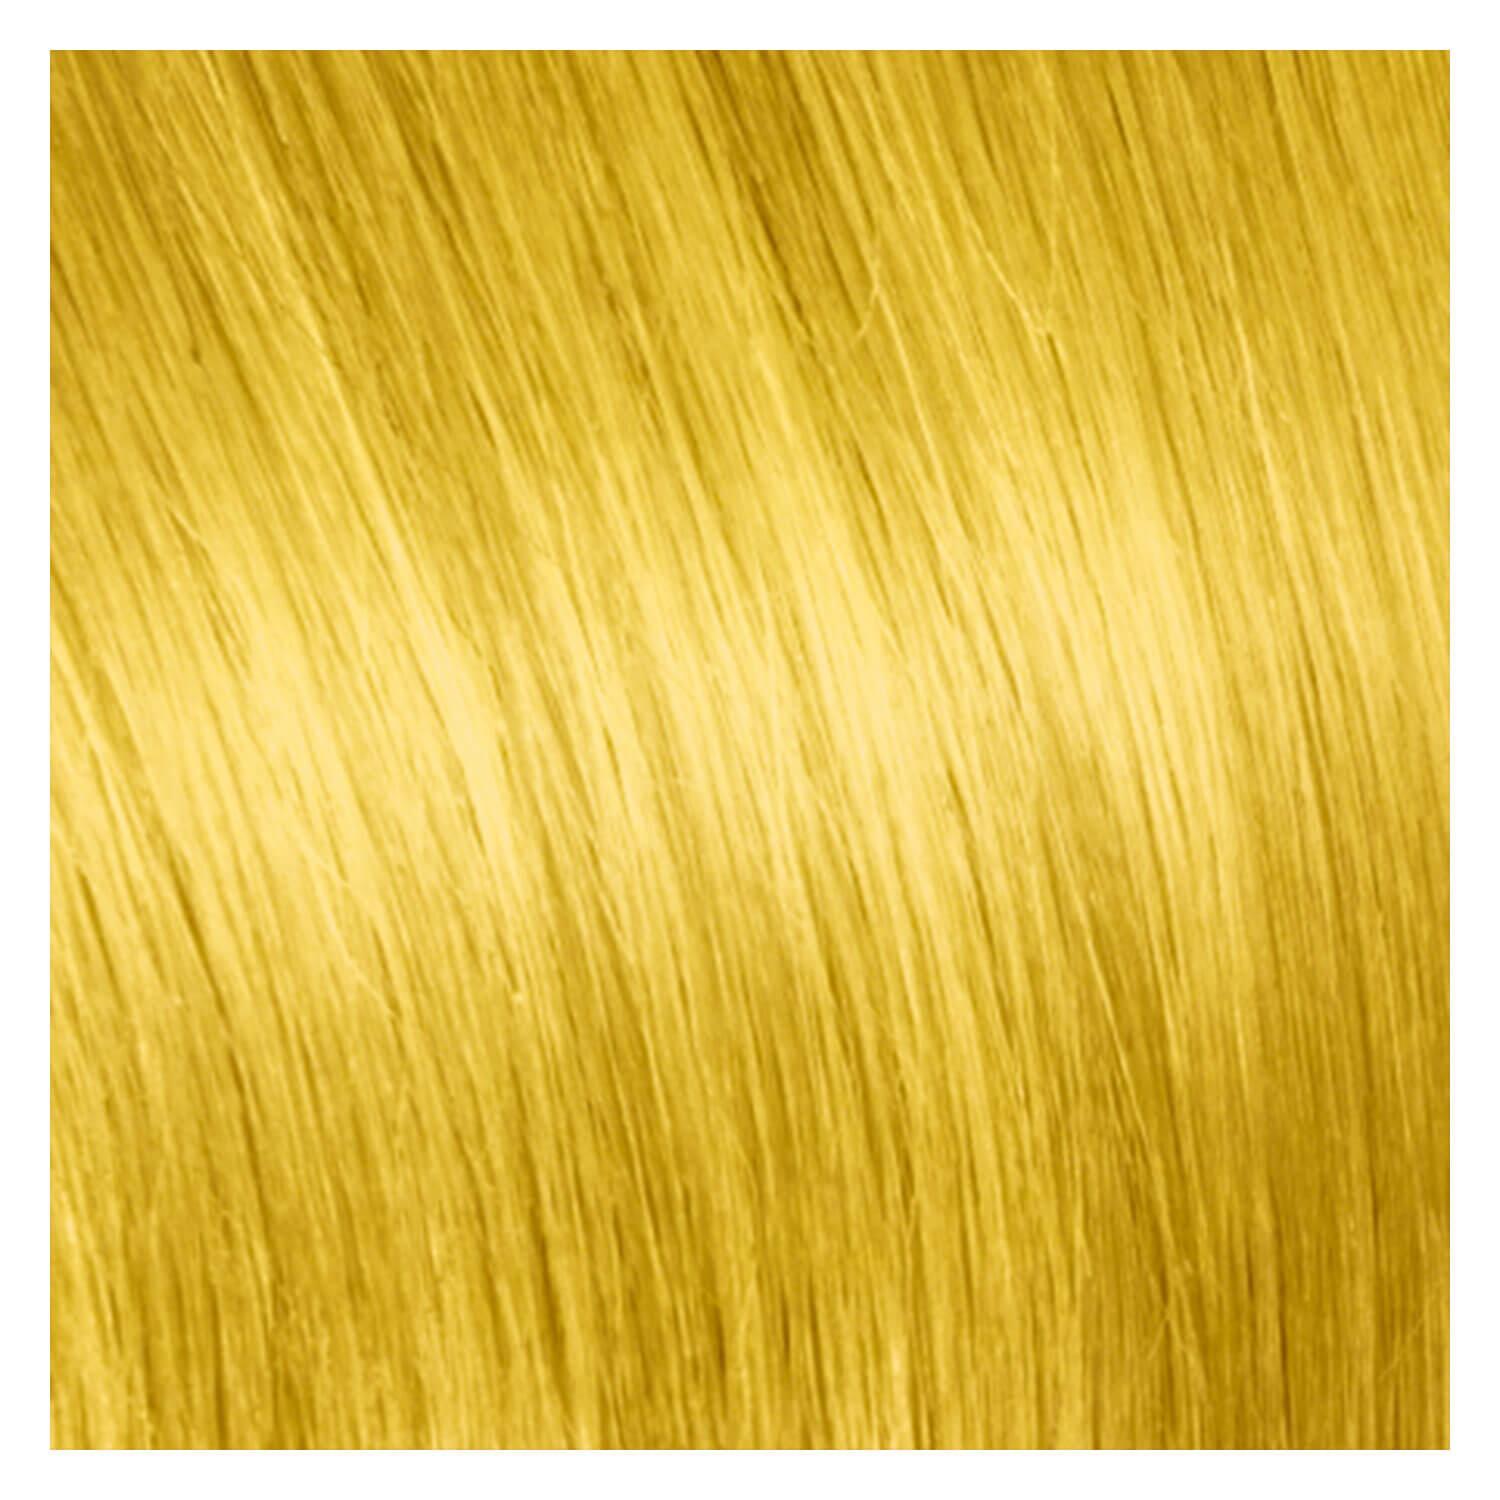 SHE Bonding-System Hair Extensions Fantasy Straight - Gelb 55/60cm